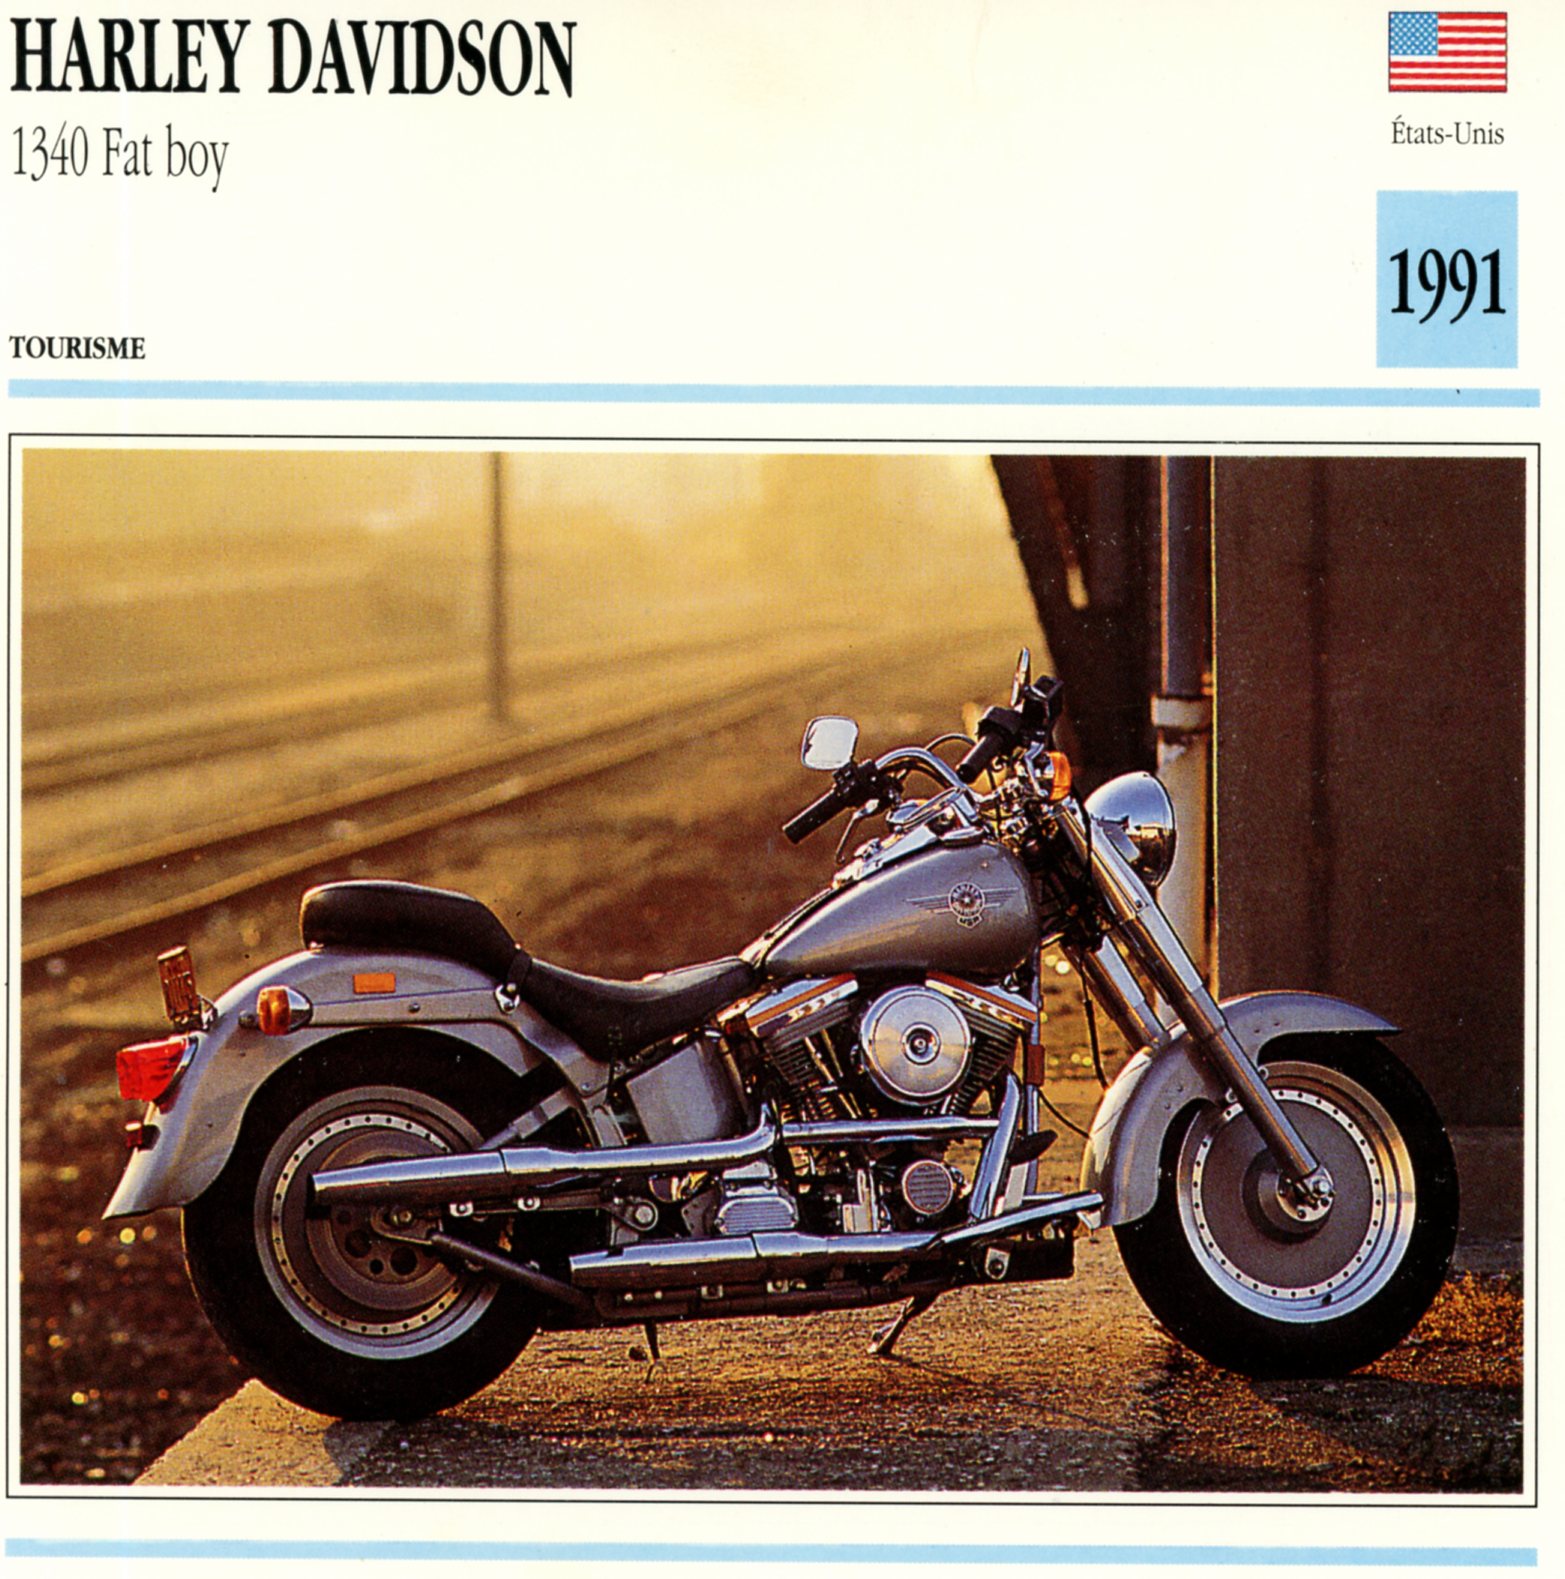 HARLEY DAVIDSON 1340 FAT BOY 1991 - FICHE MOTO CARACTERISTIQUES